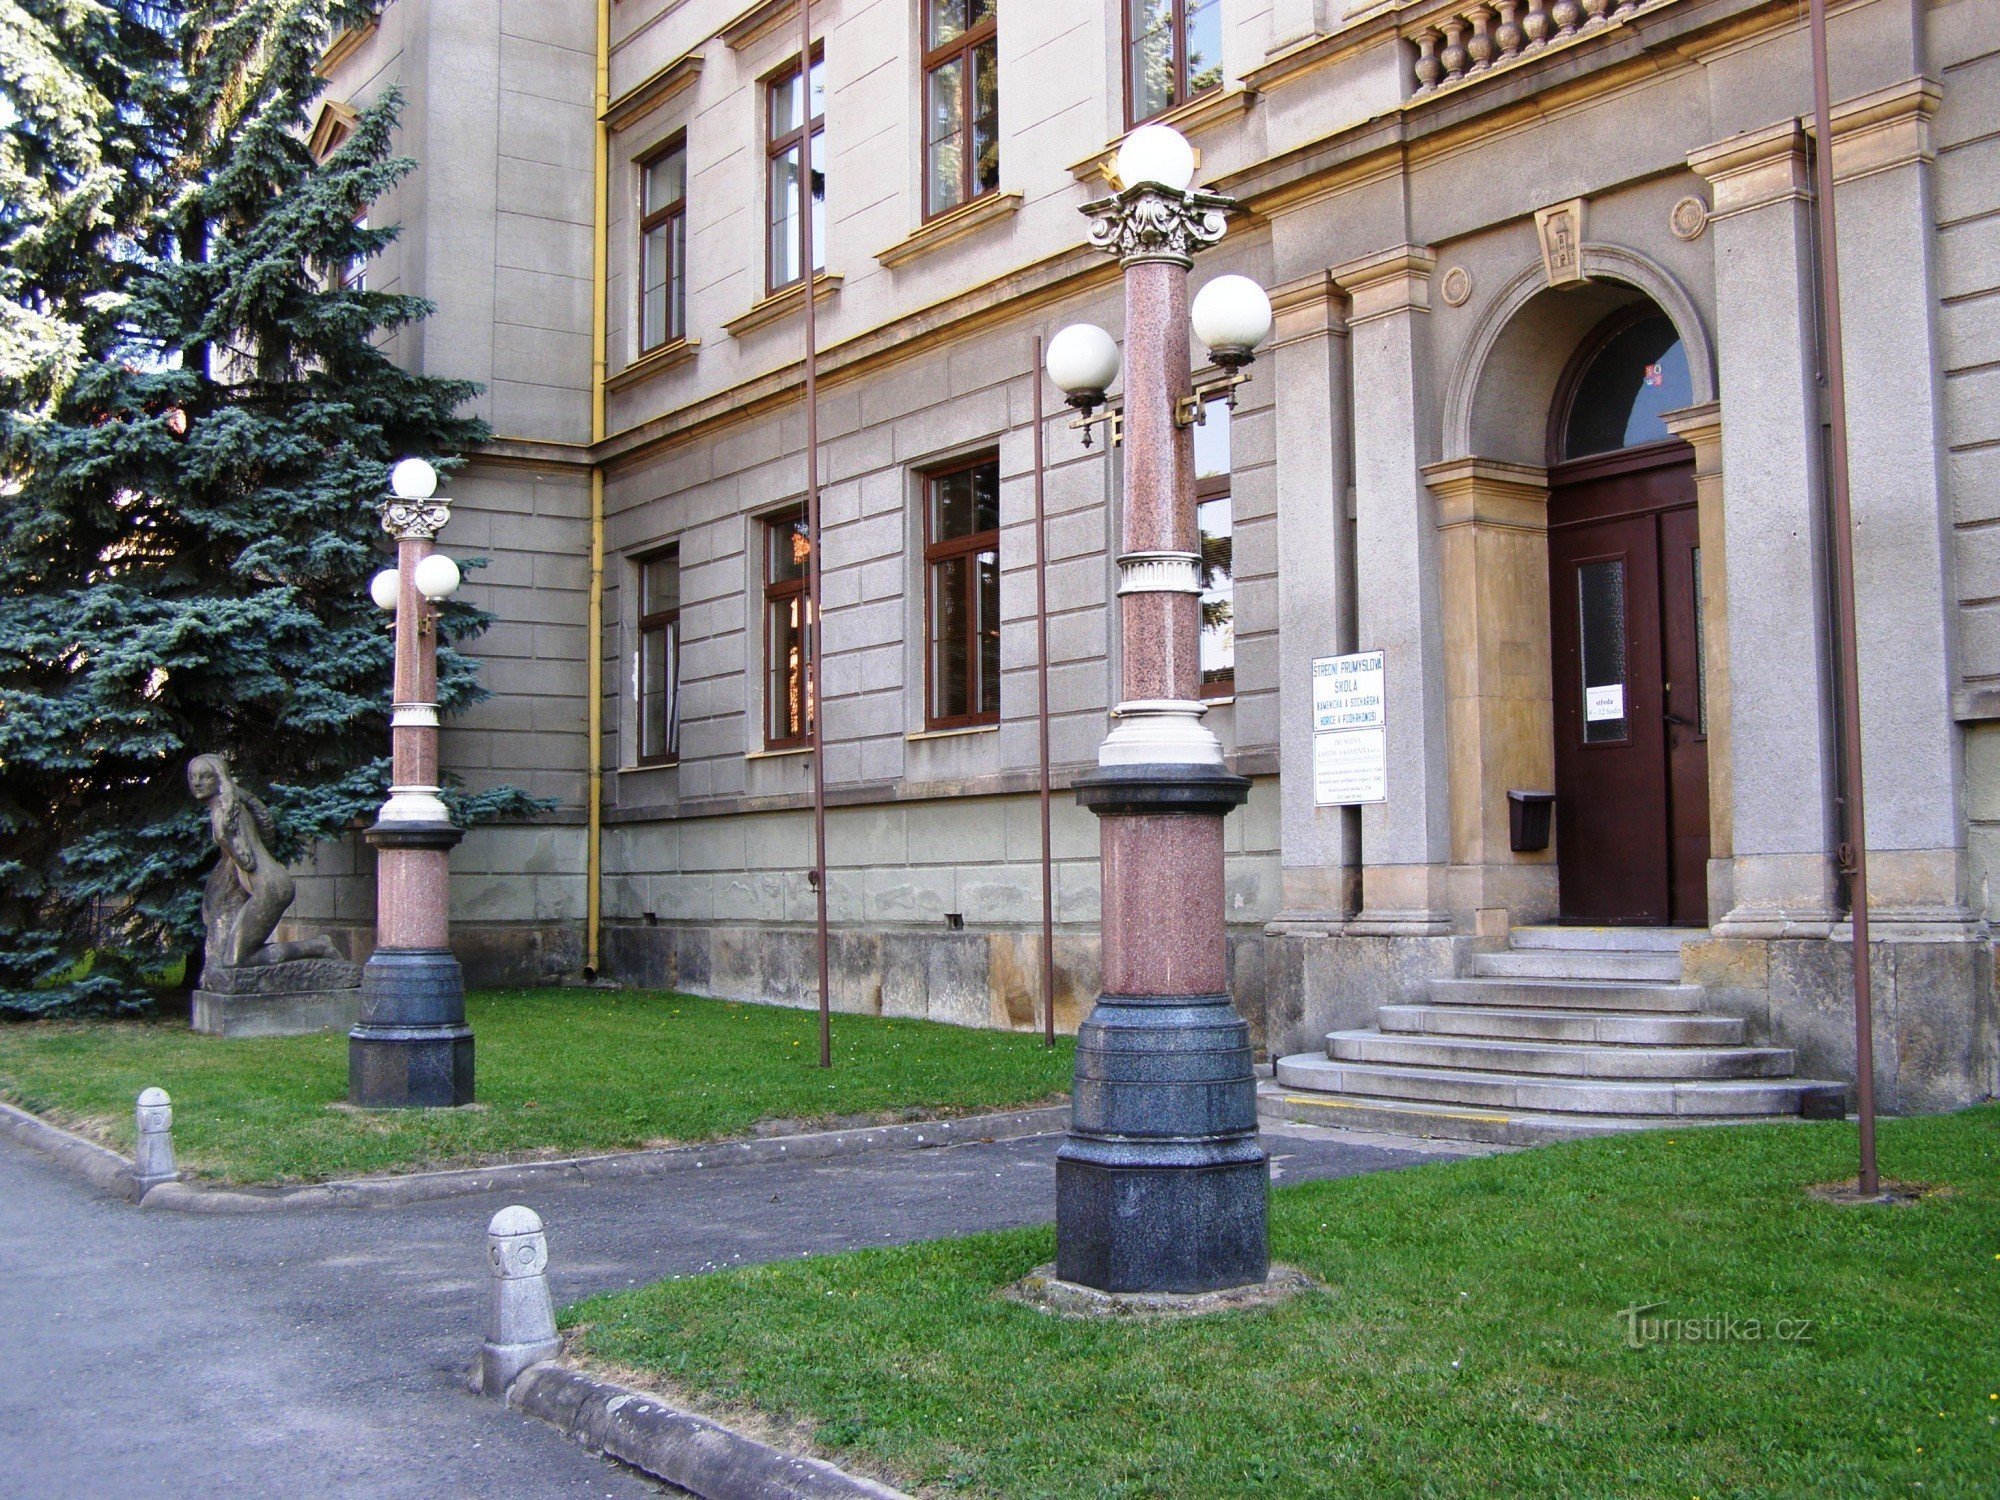 Hořice - escola de escultura e pedreiro